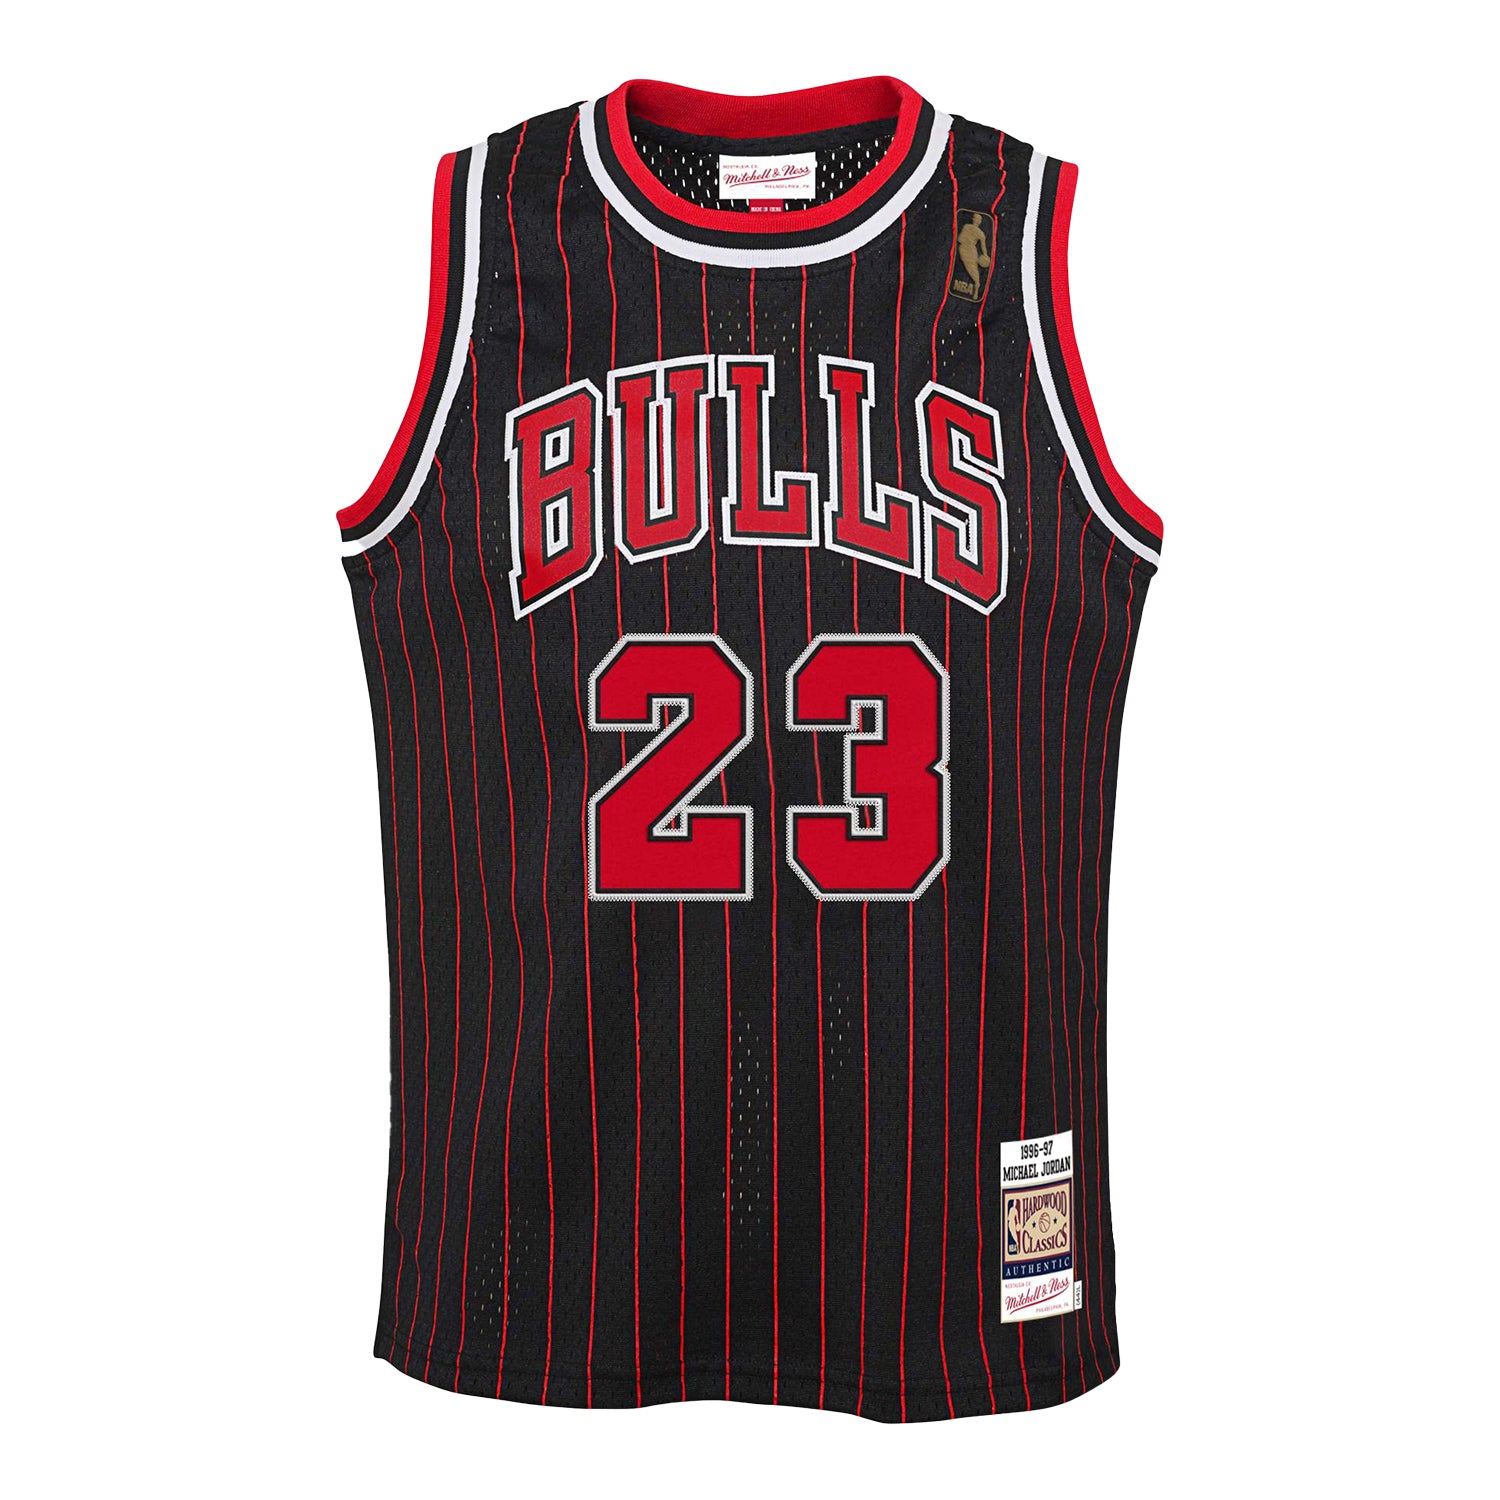 Youth Chicago Bulls Authentic Mitchell & Ness Michael Jordan 1996